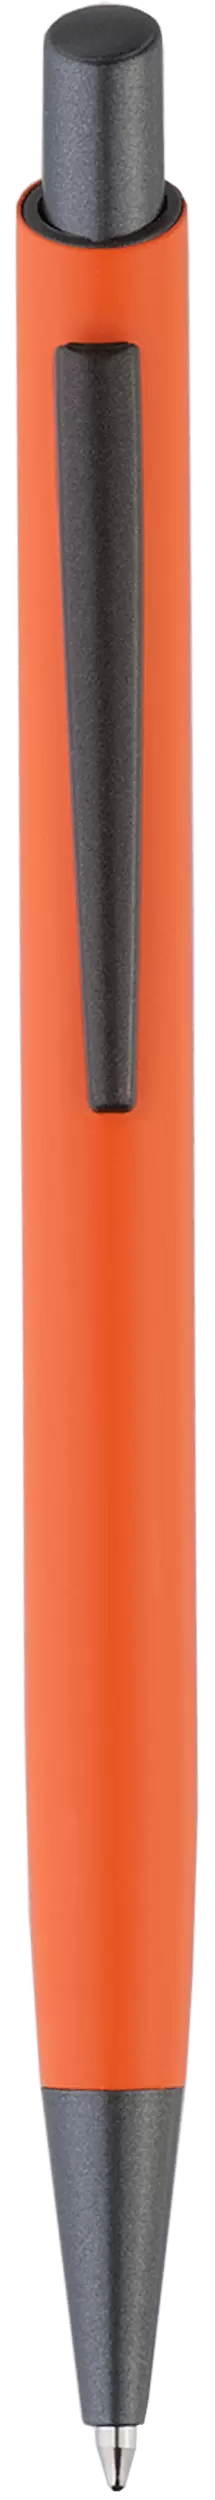 Ручка ELFARO TITAN Оранжевая 3052.05